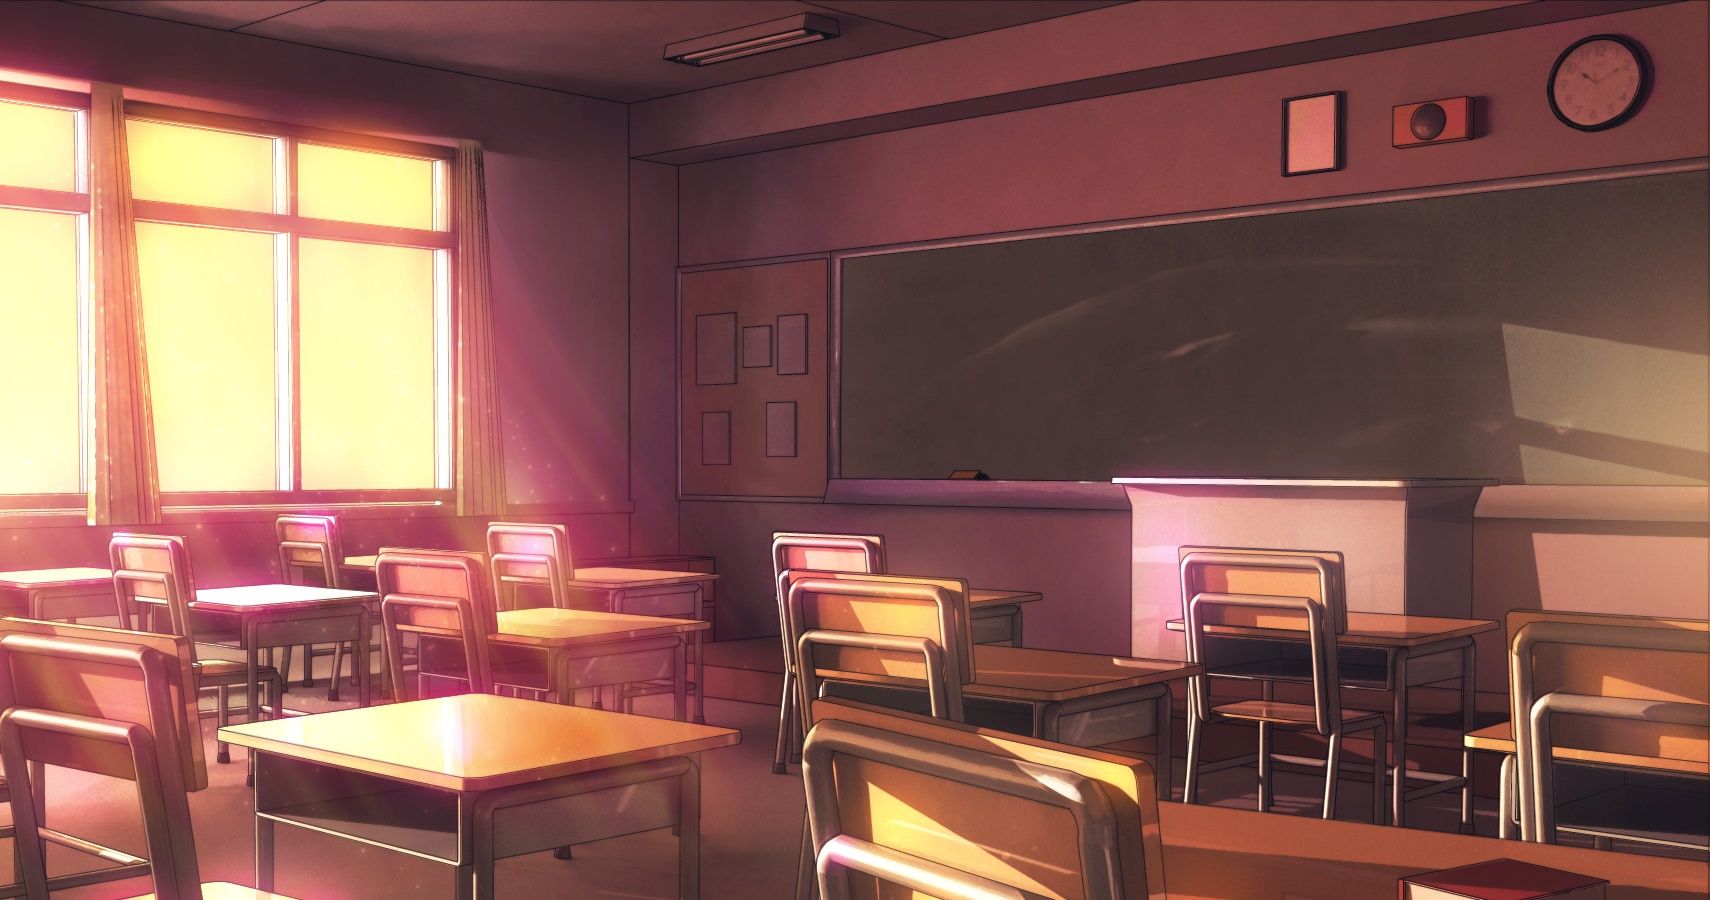 23 Anime Schools to Fall in Love with School Life - My Otaku World